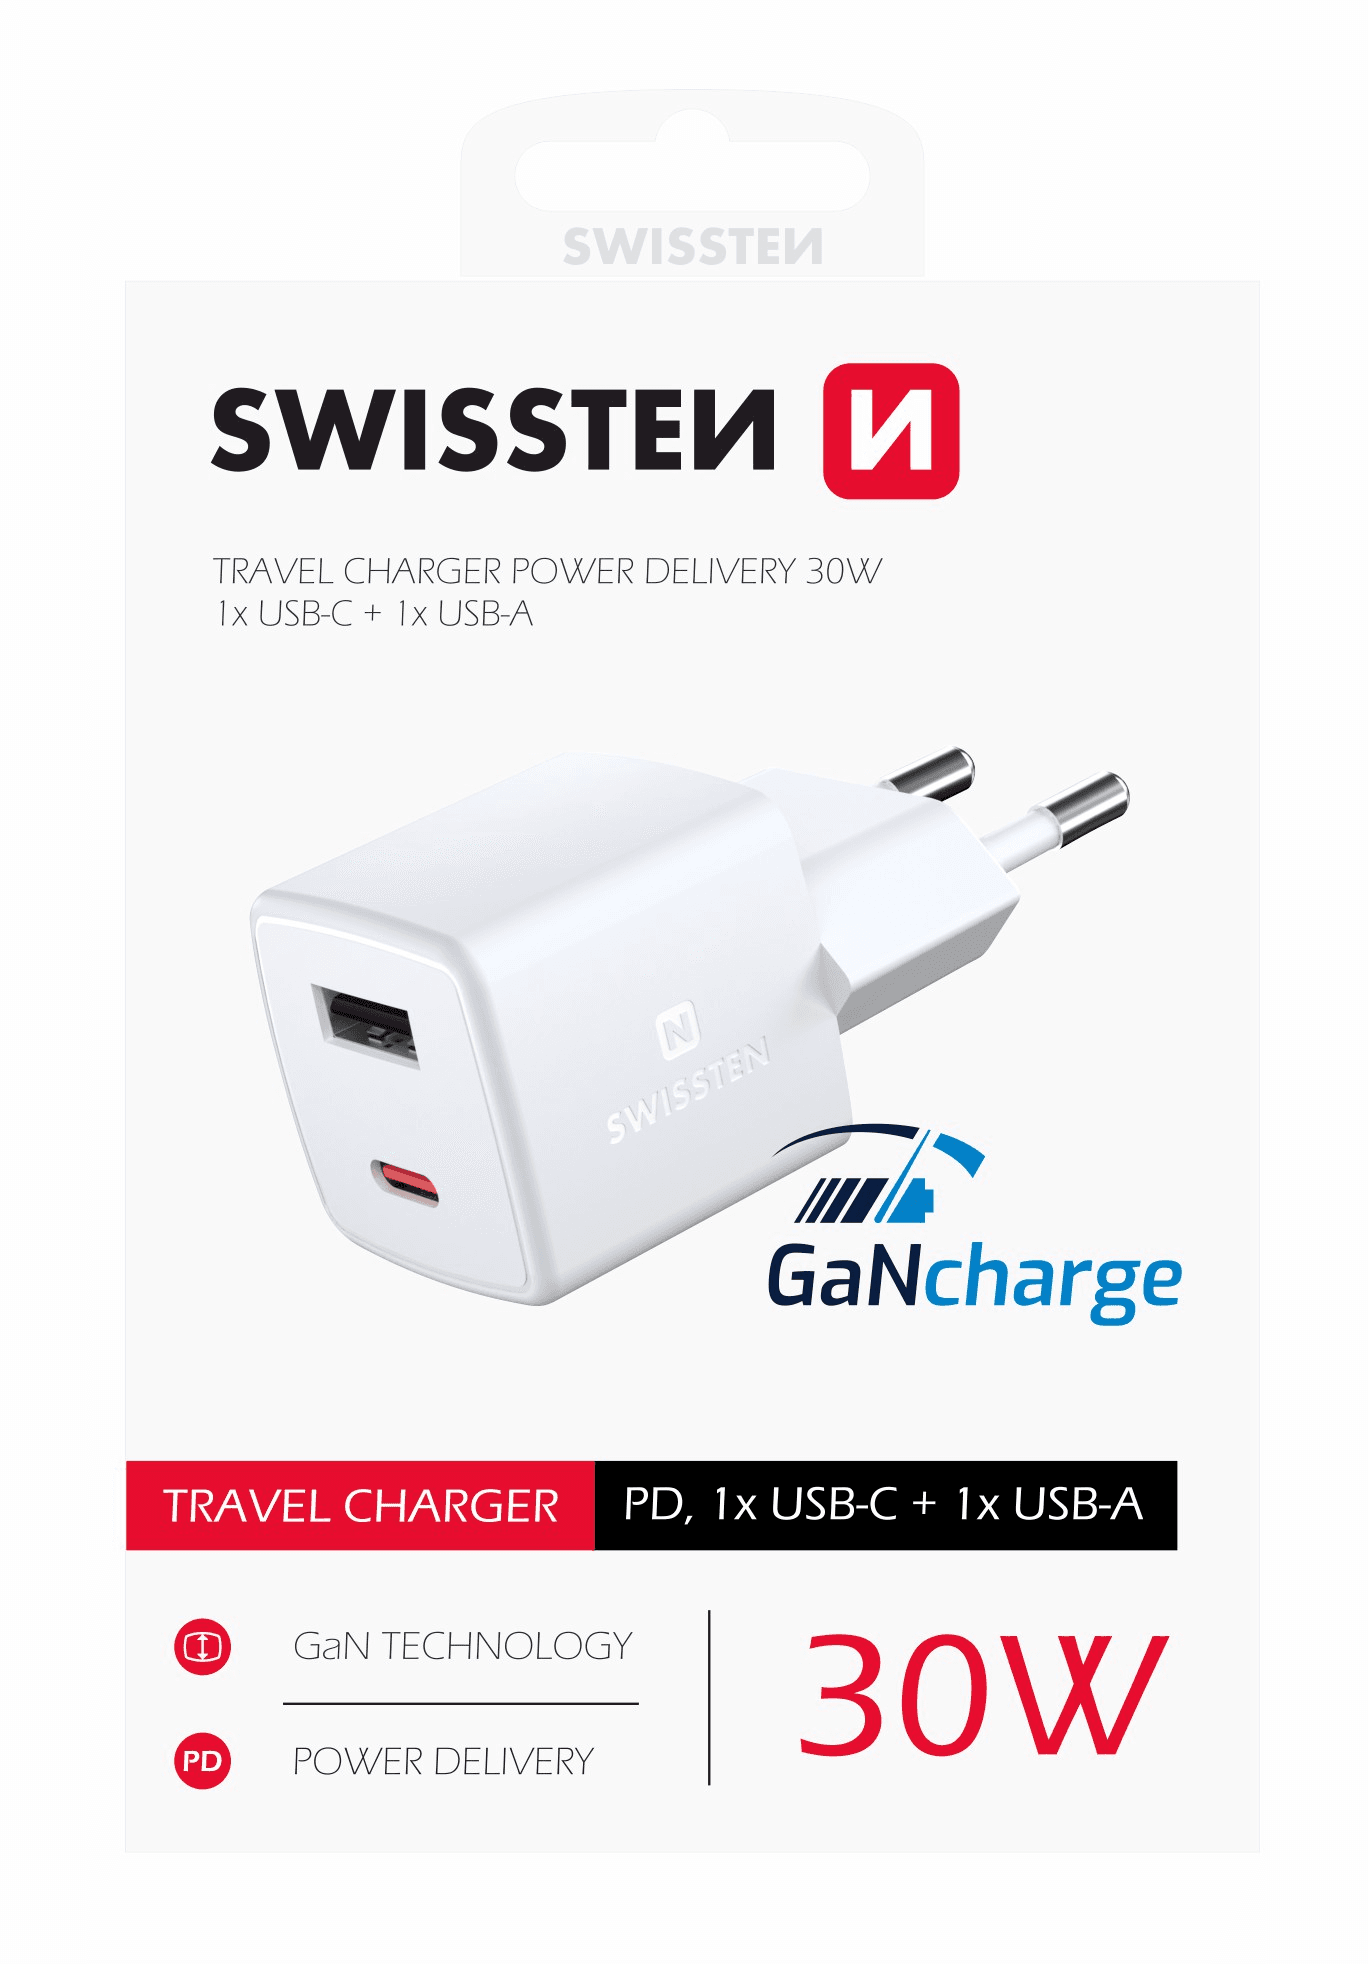 SWISSTEN MINI GaN TRAVEL CHARGER 1x USB-C + 1xUSB 30W POWER DELIVERY